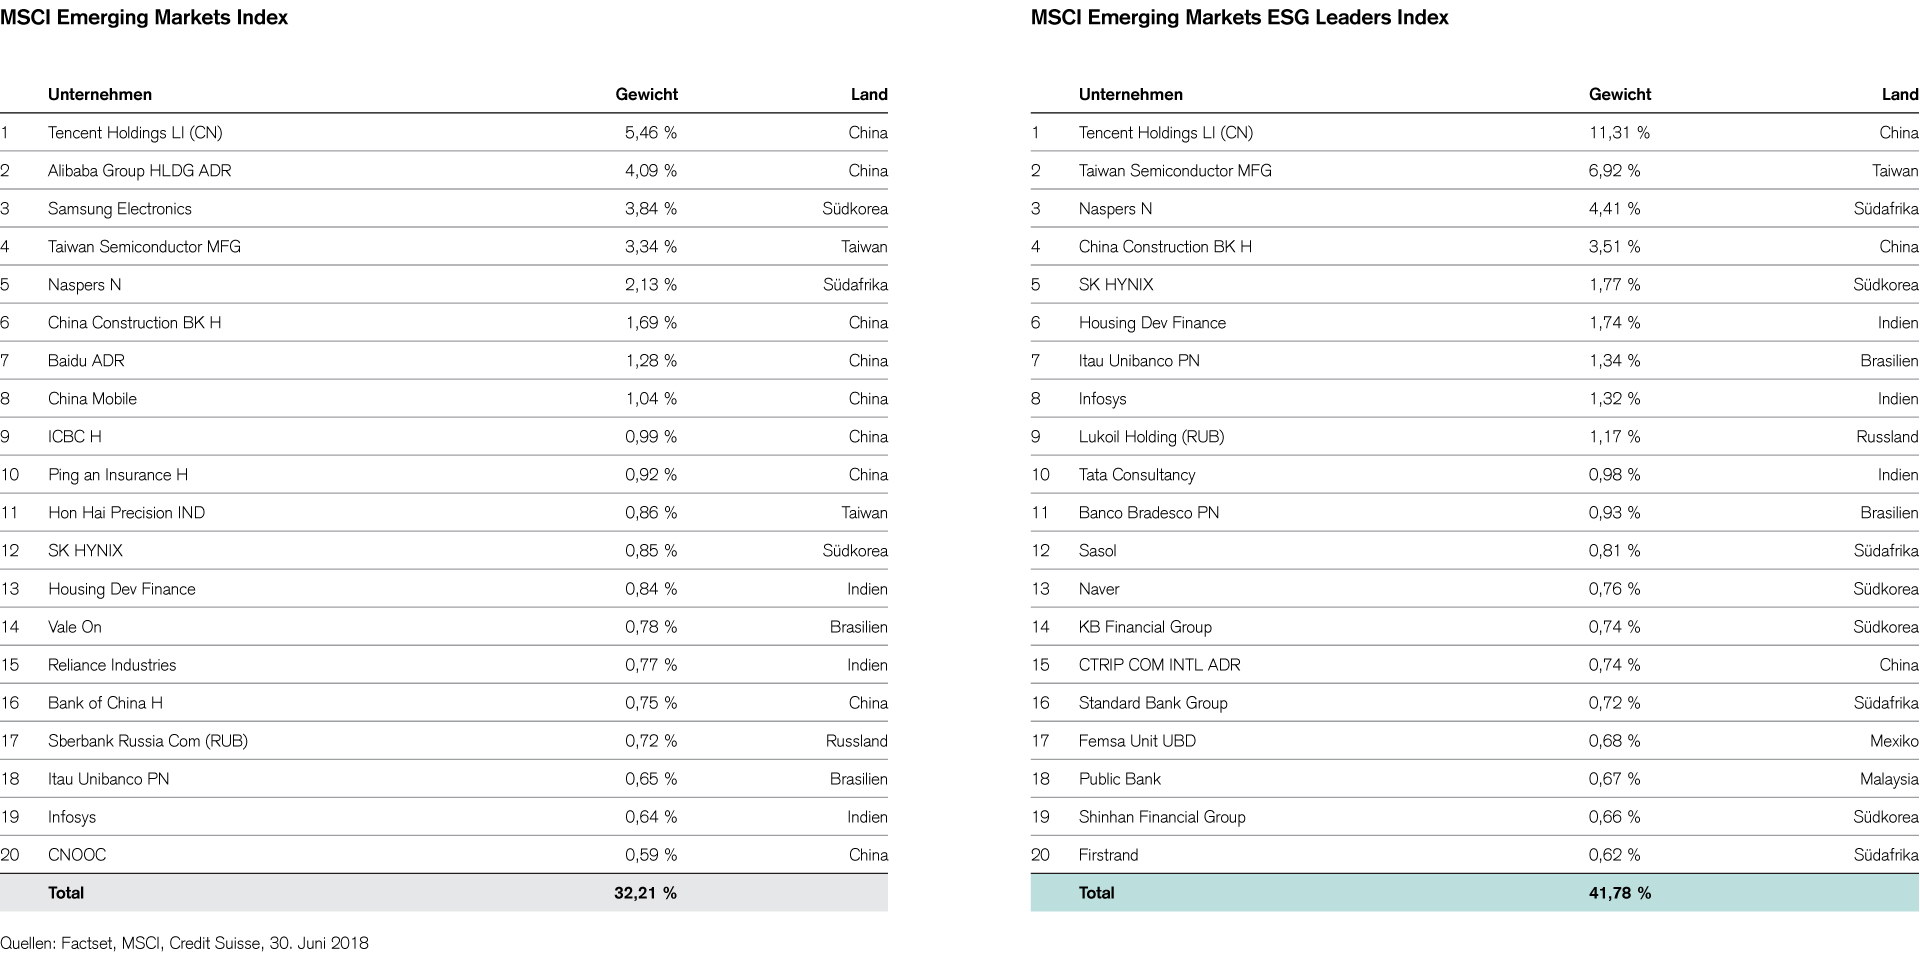 MSCI Emerging Markets ESG Leaders Index gegenüber MSCI Emerging Markets Index – die 20 grössten Positionen